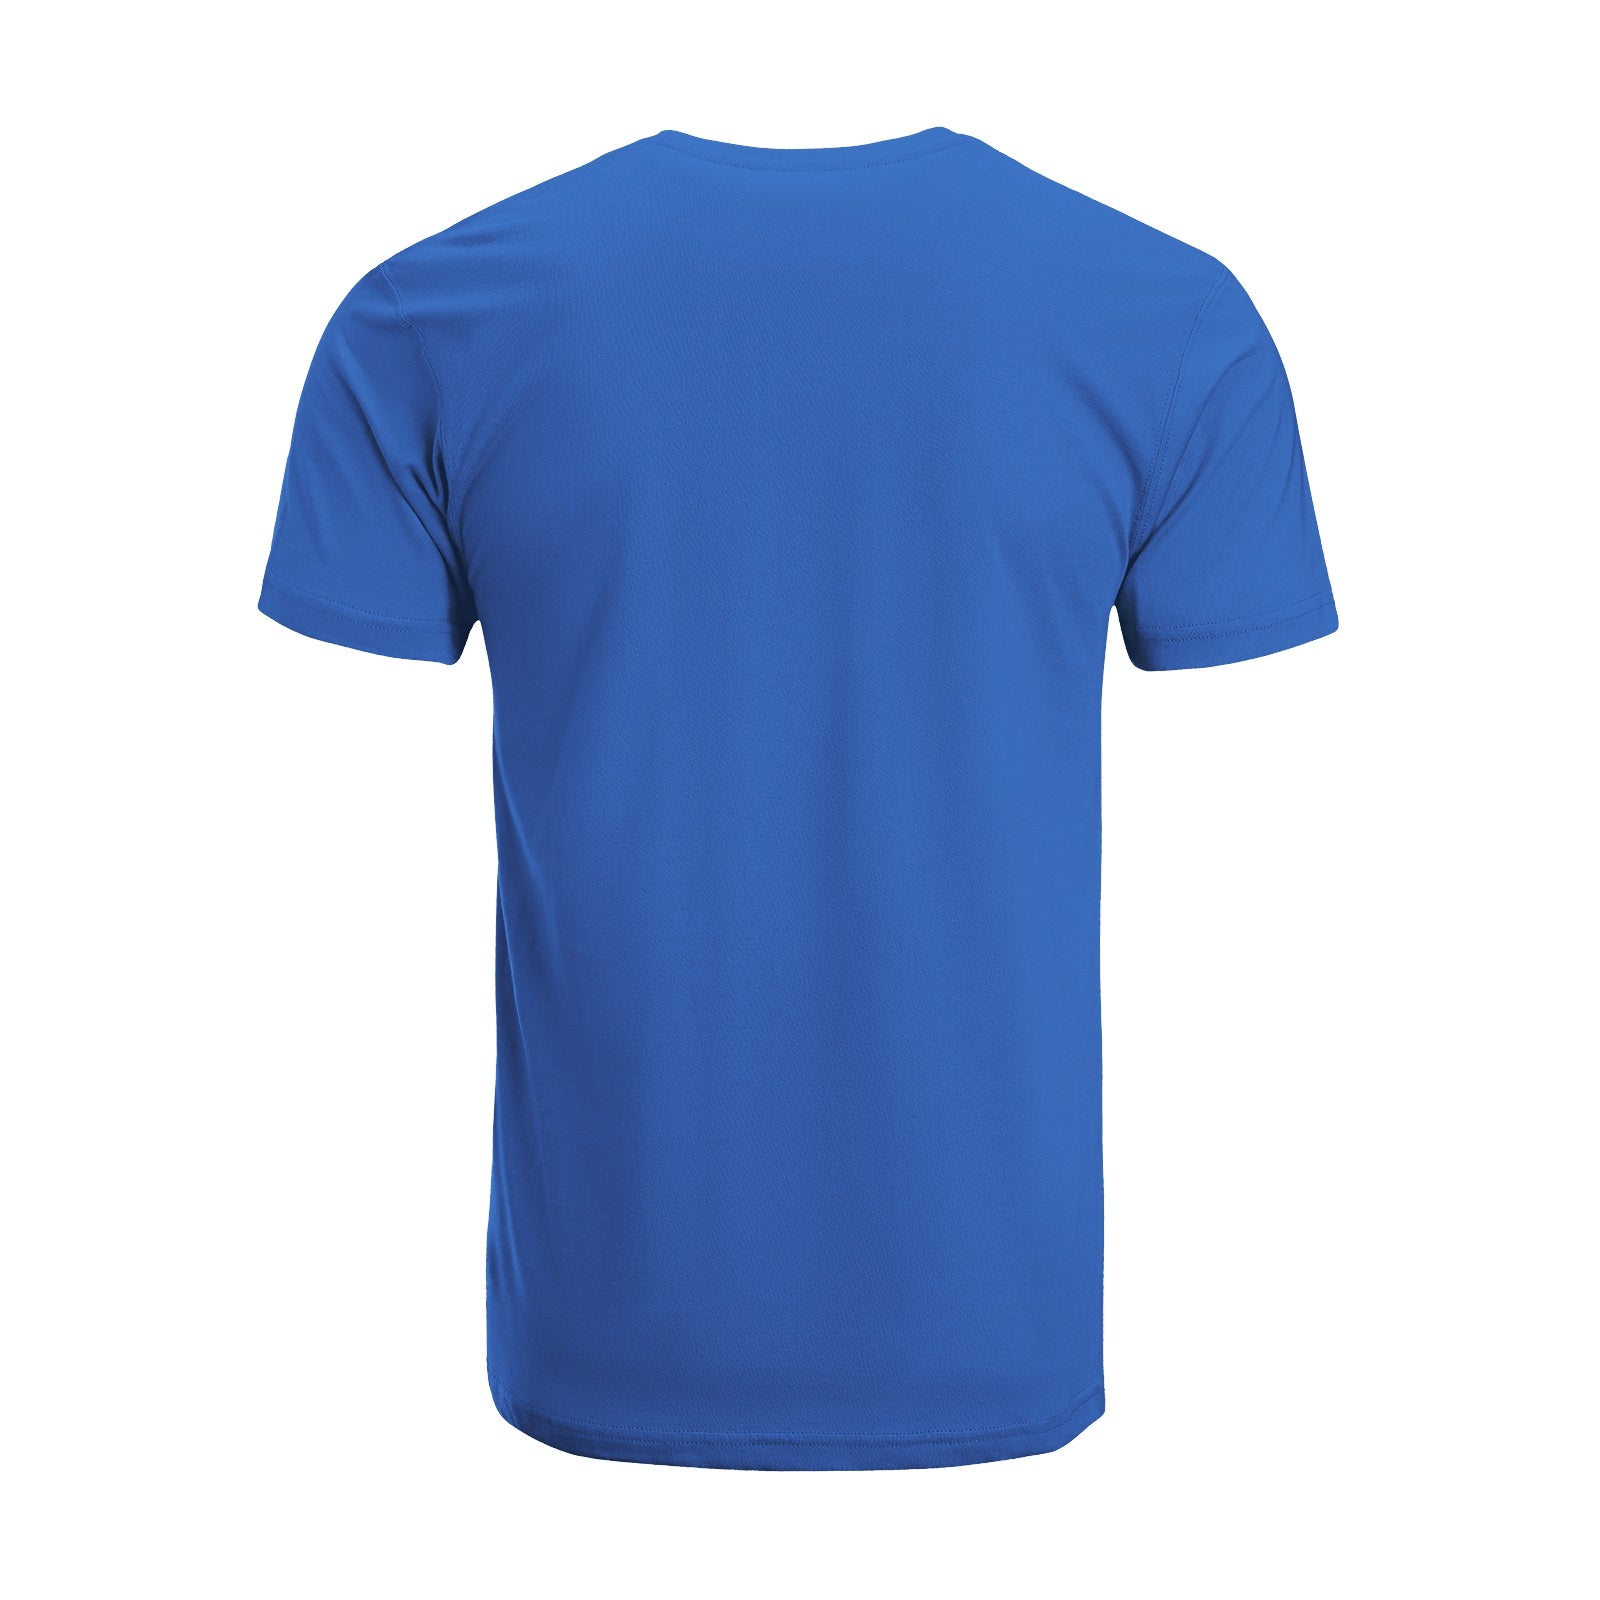 Unisex Short Sleeve Crew Neck Cotton Jersey T-Shirt Gym No. 13 - Tara-Outfits.com